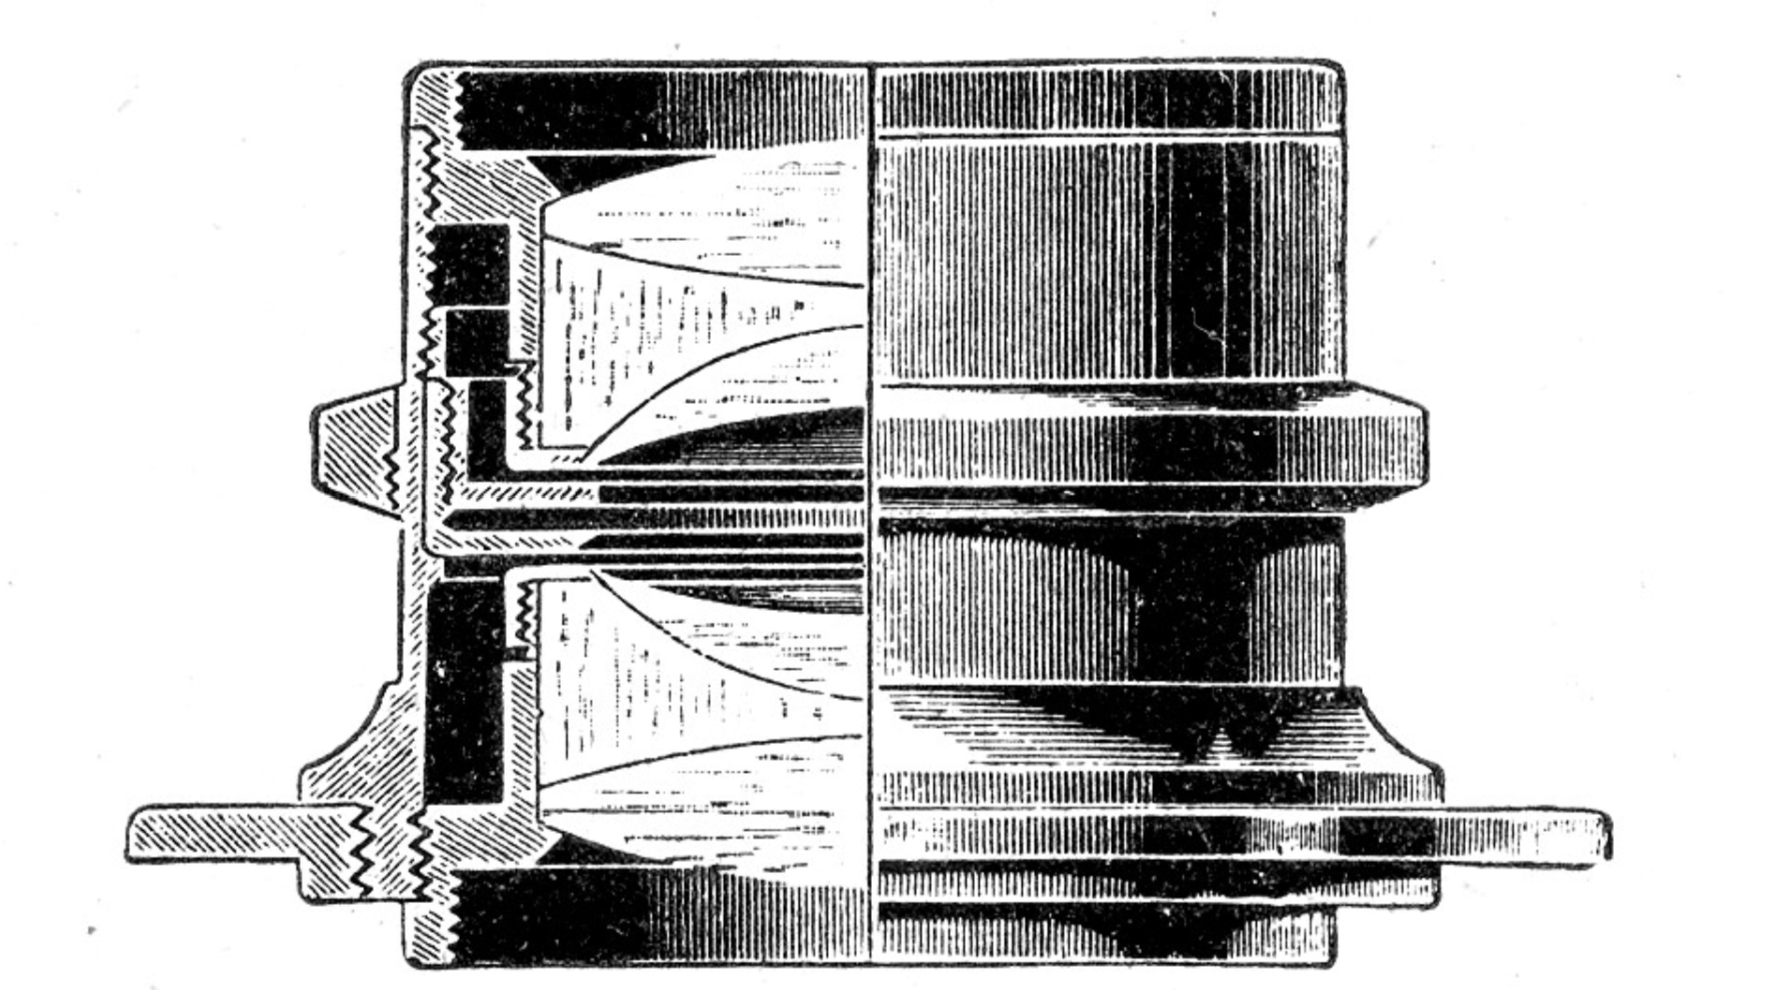 Schematic diagram of the lens "Dagor".